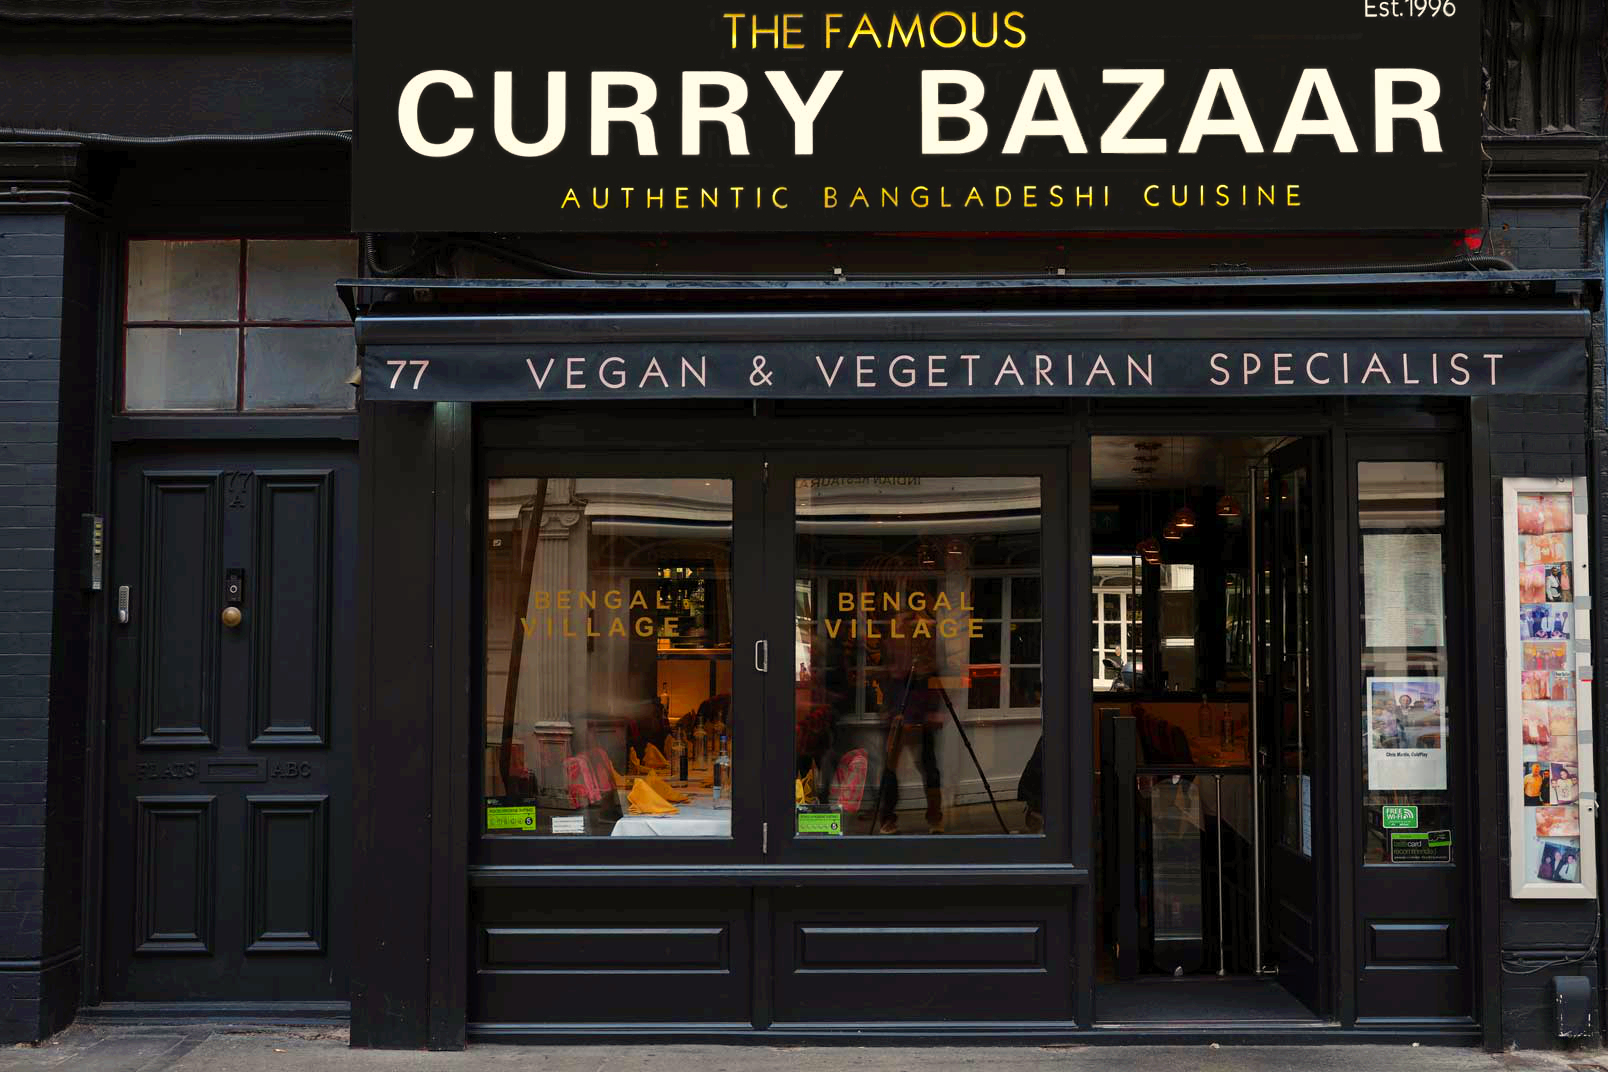 Curry Bazaar restaurant, Brick Lane, East End of London.